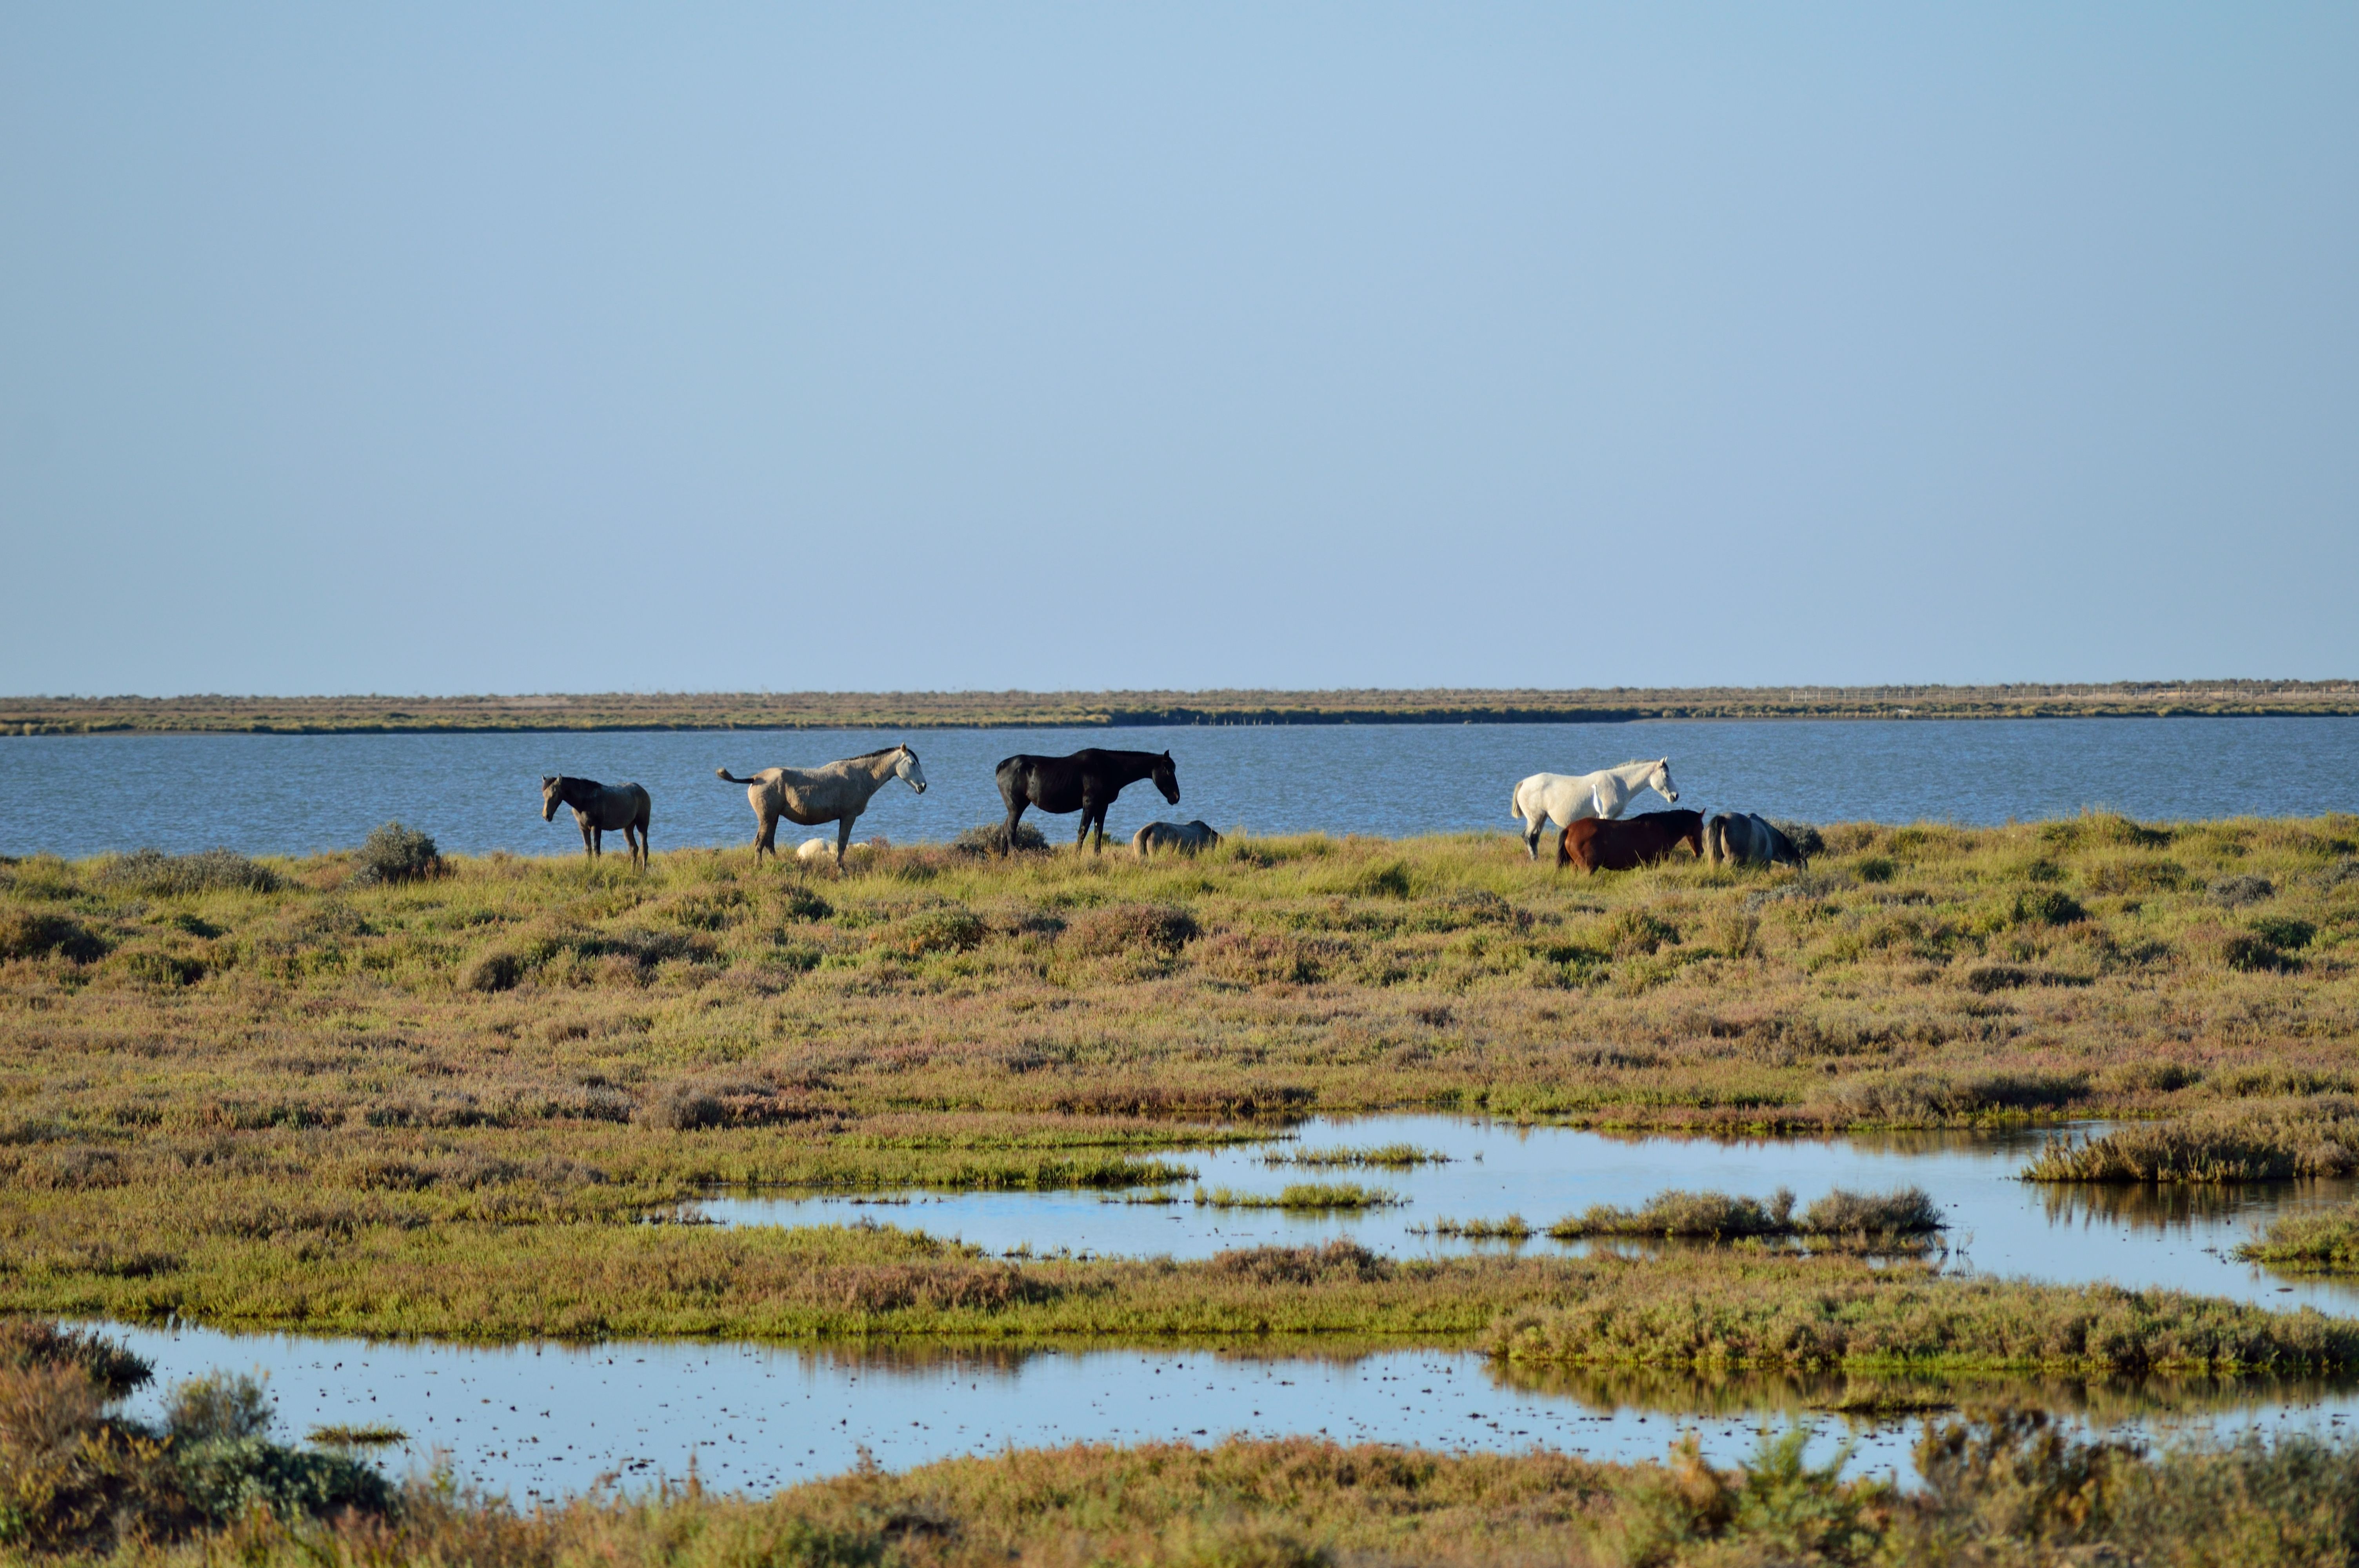 Caballos en libertad durante la visita a Doñana